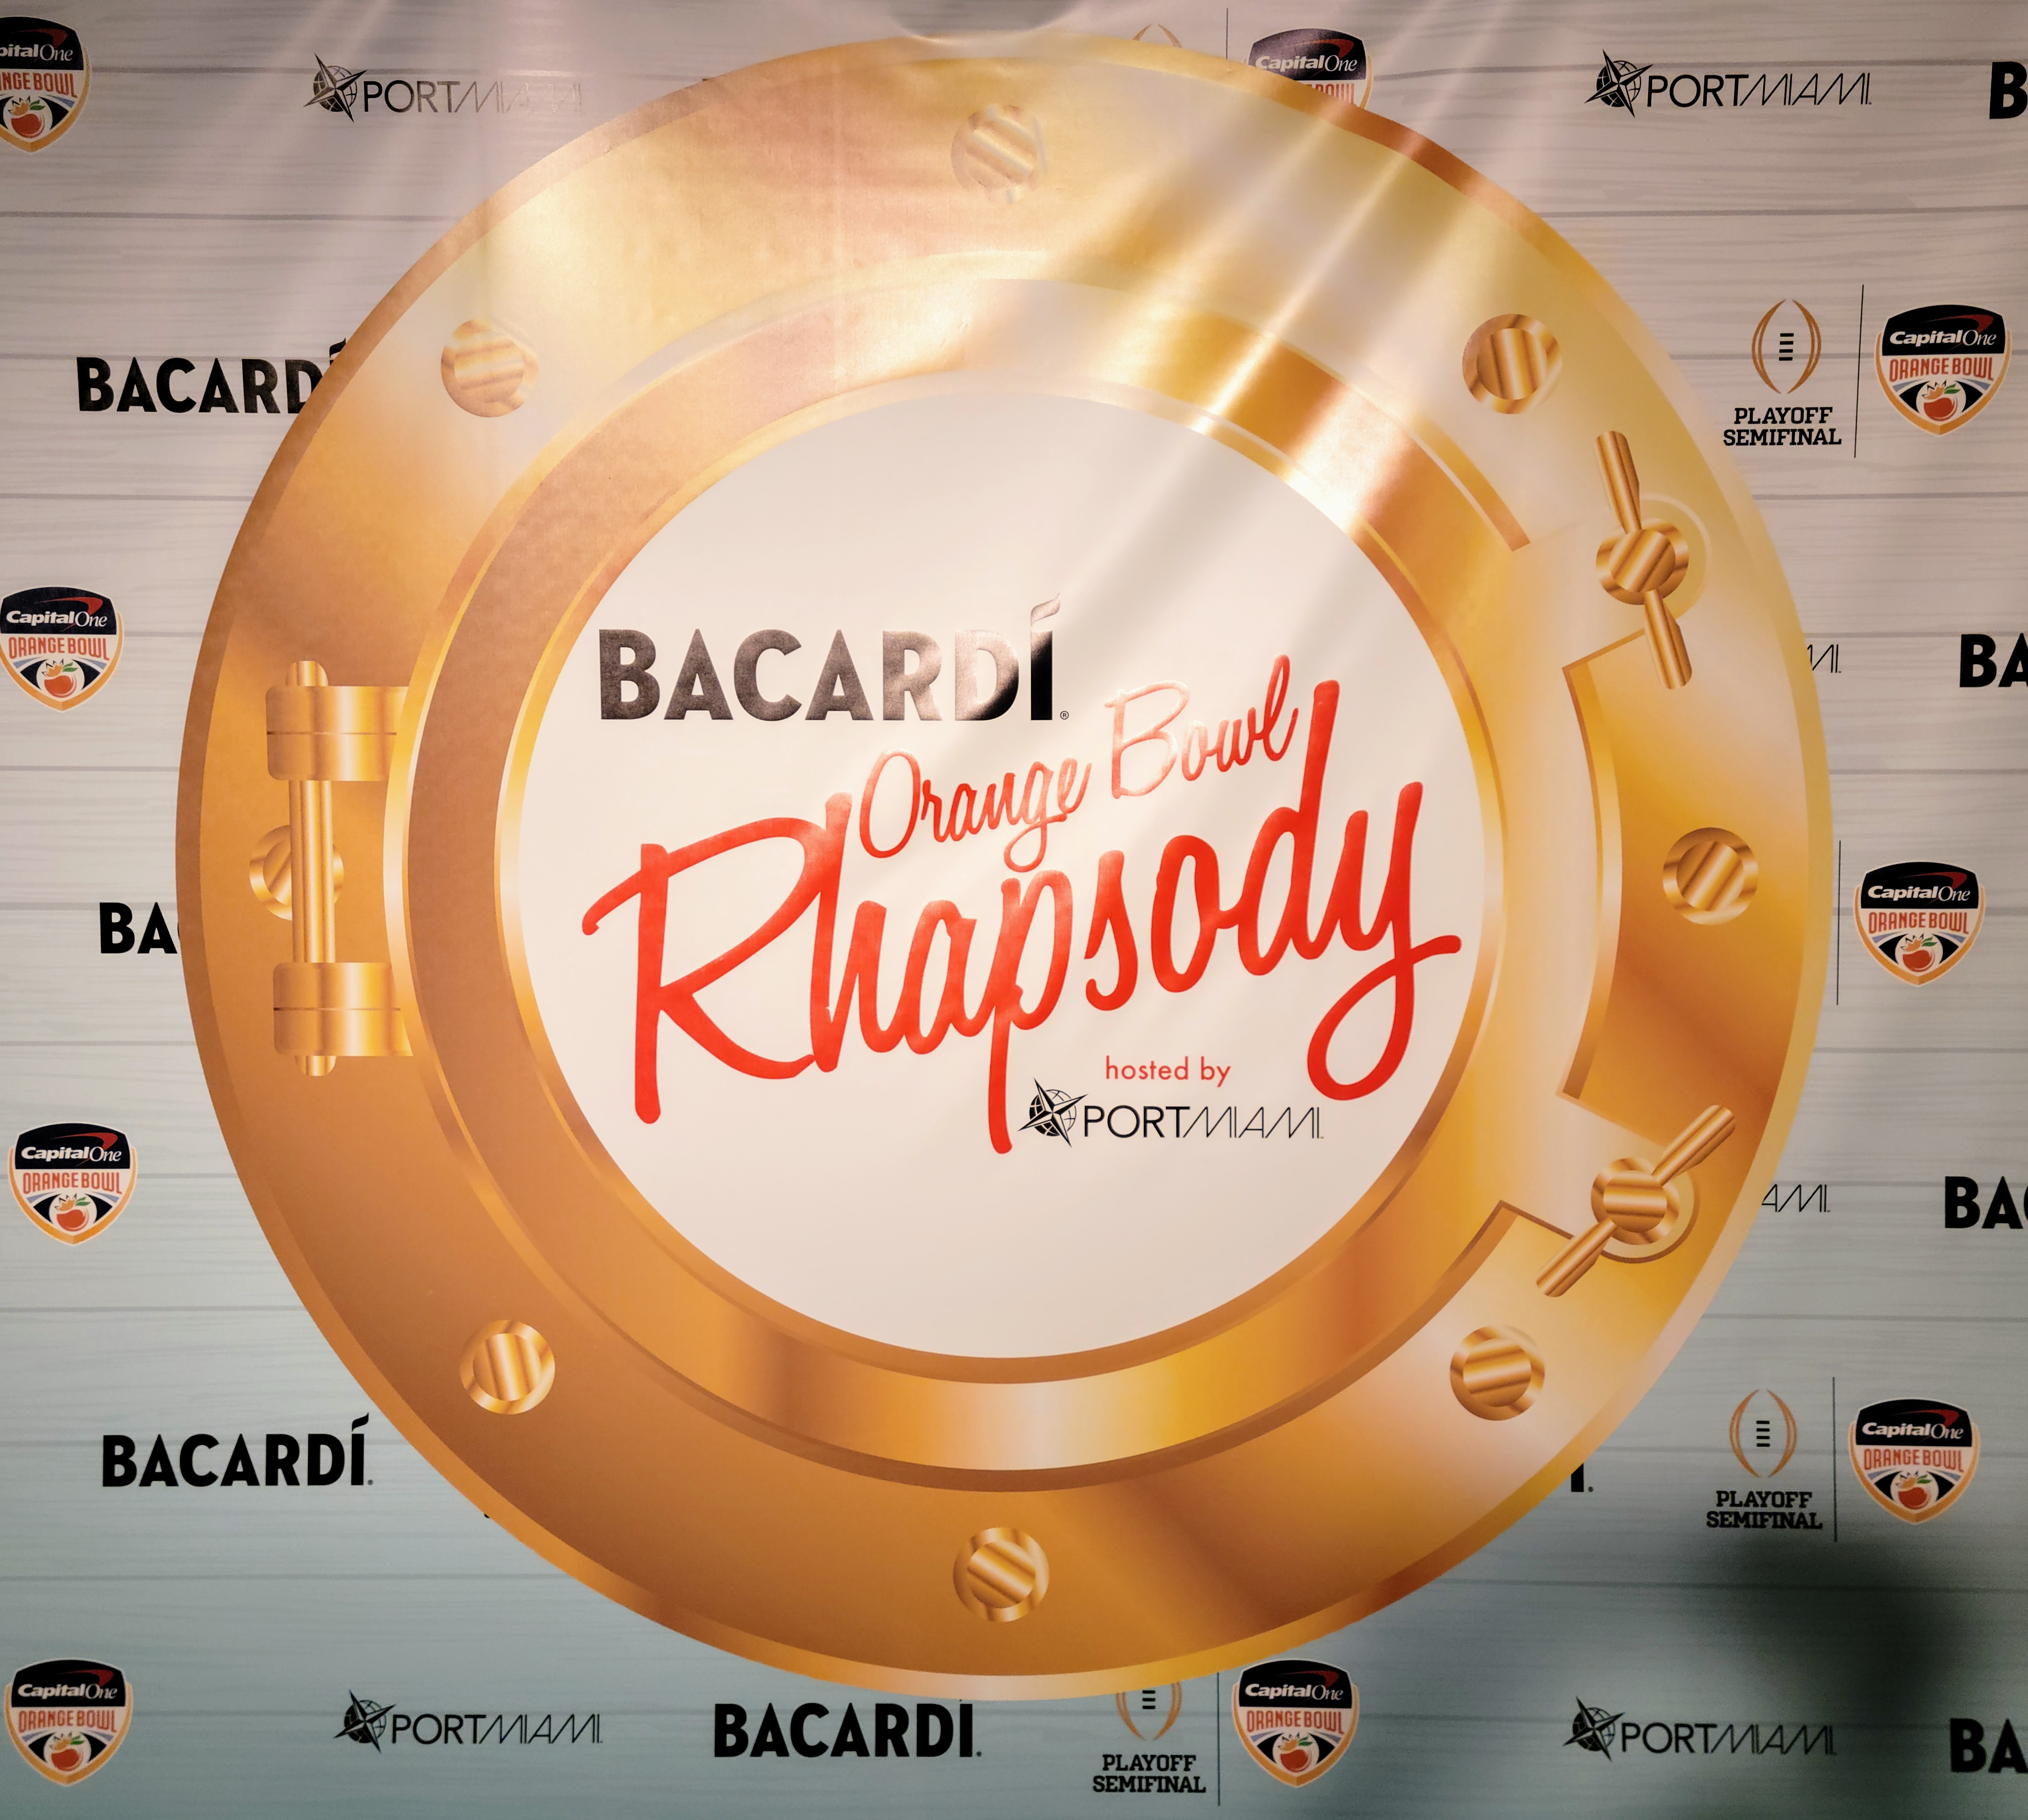 Bacardi Orange Bowl Rhapsody